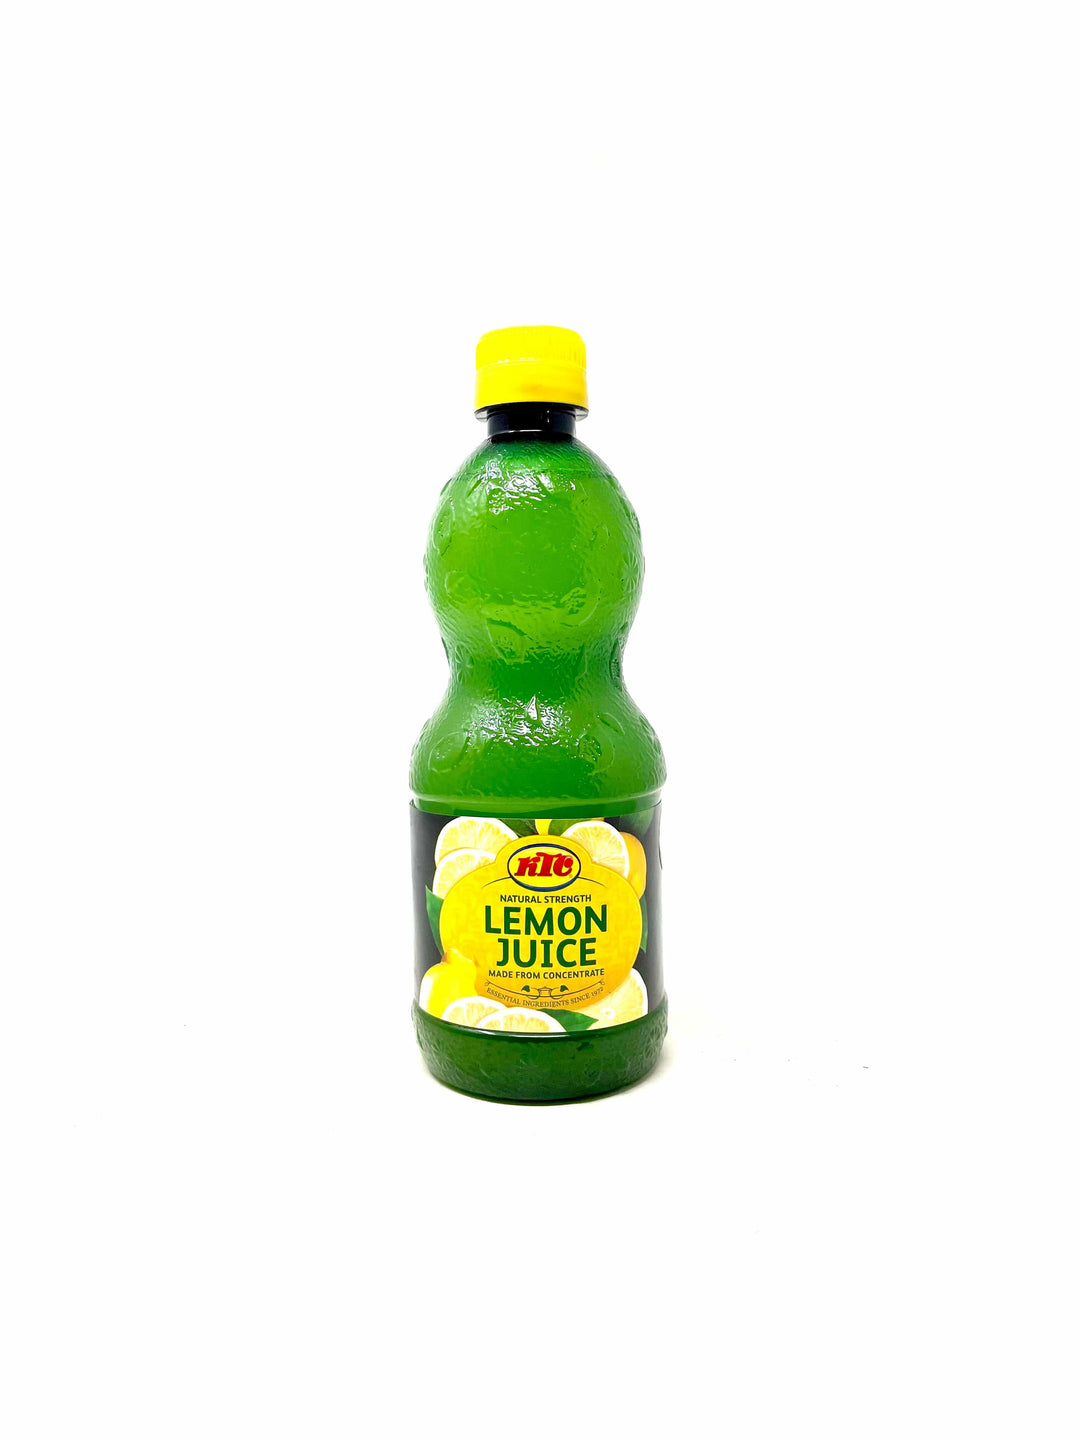 Ktc Lemon Juice 500ml